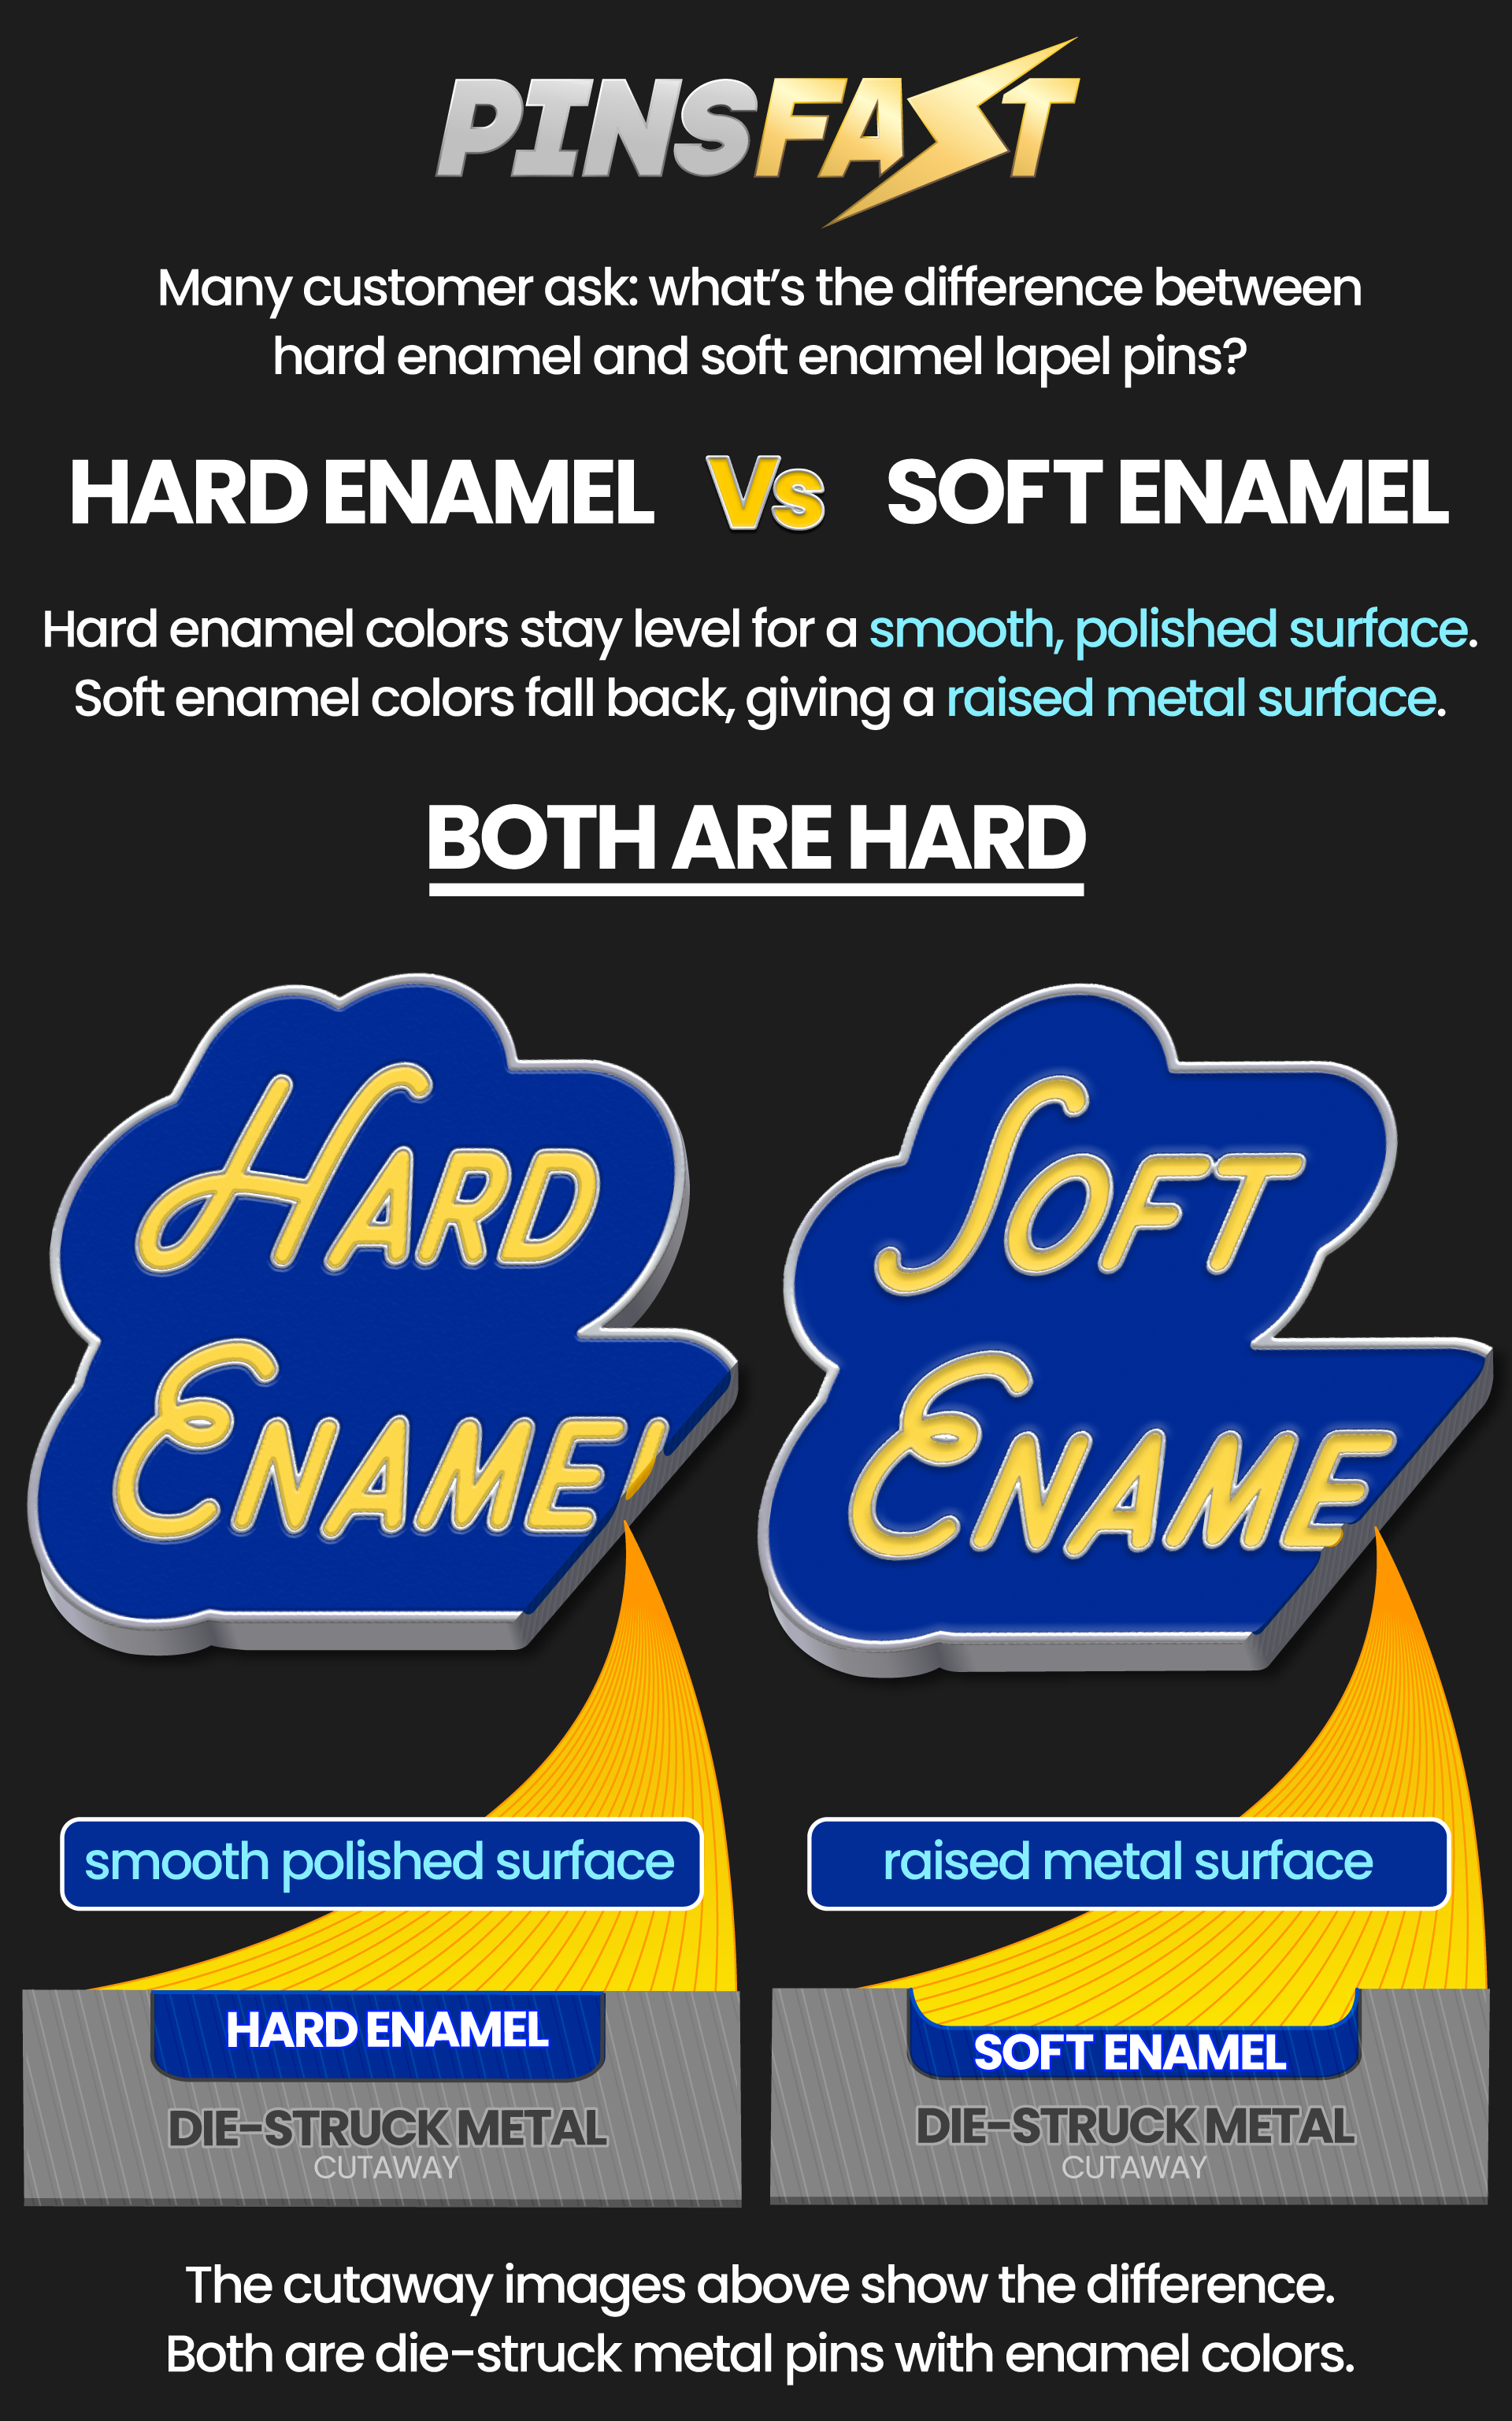 hard enamel vs soft enamel pins